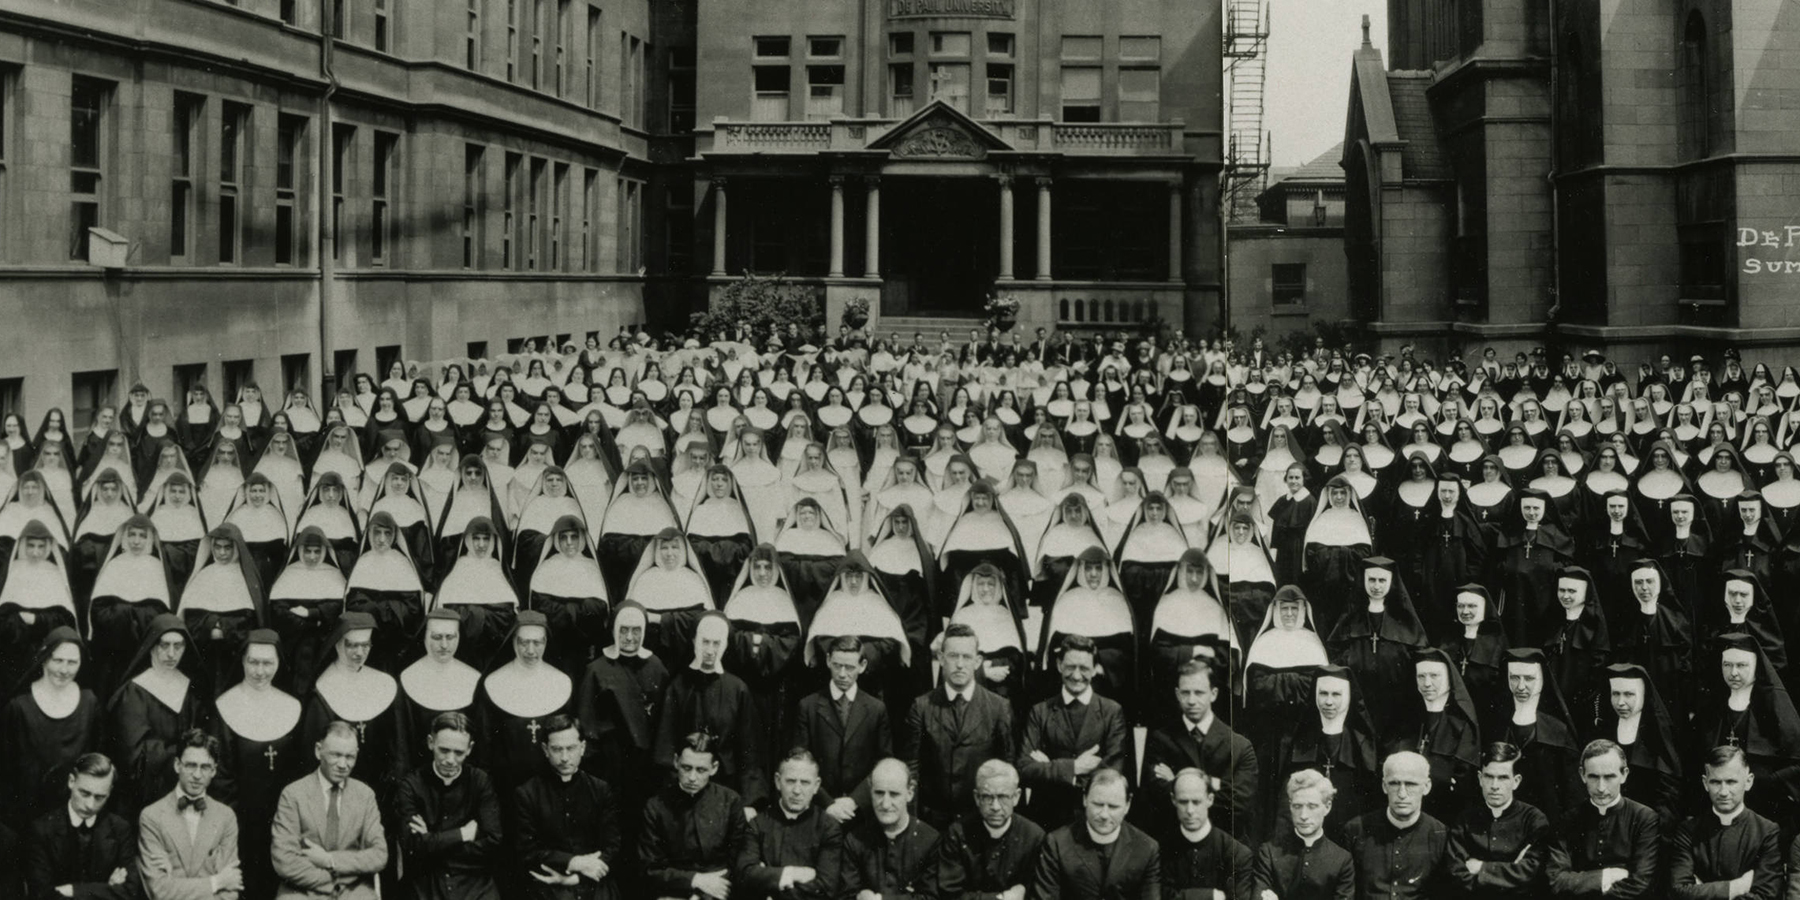 The summer school class of 1912